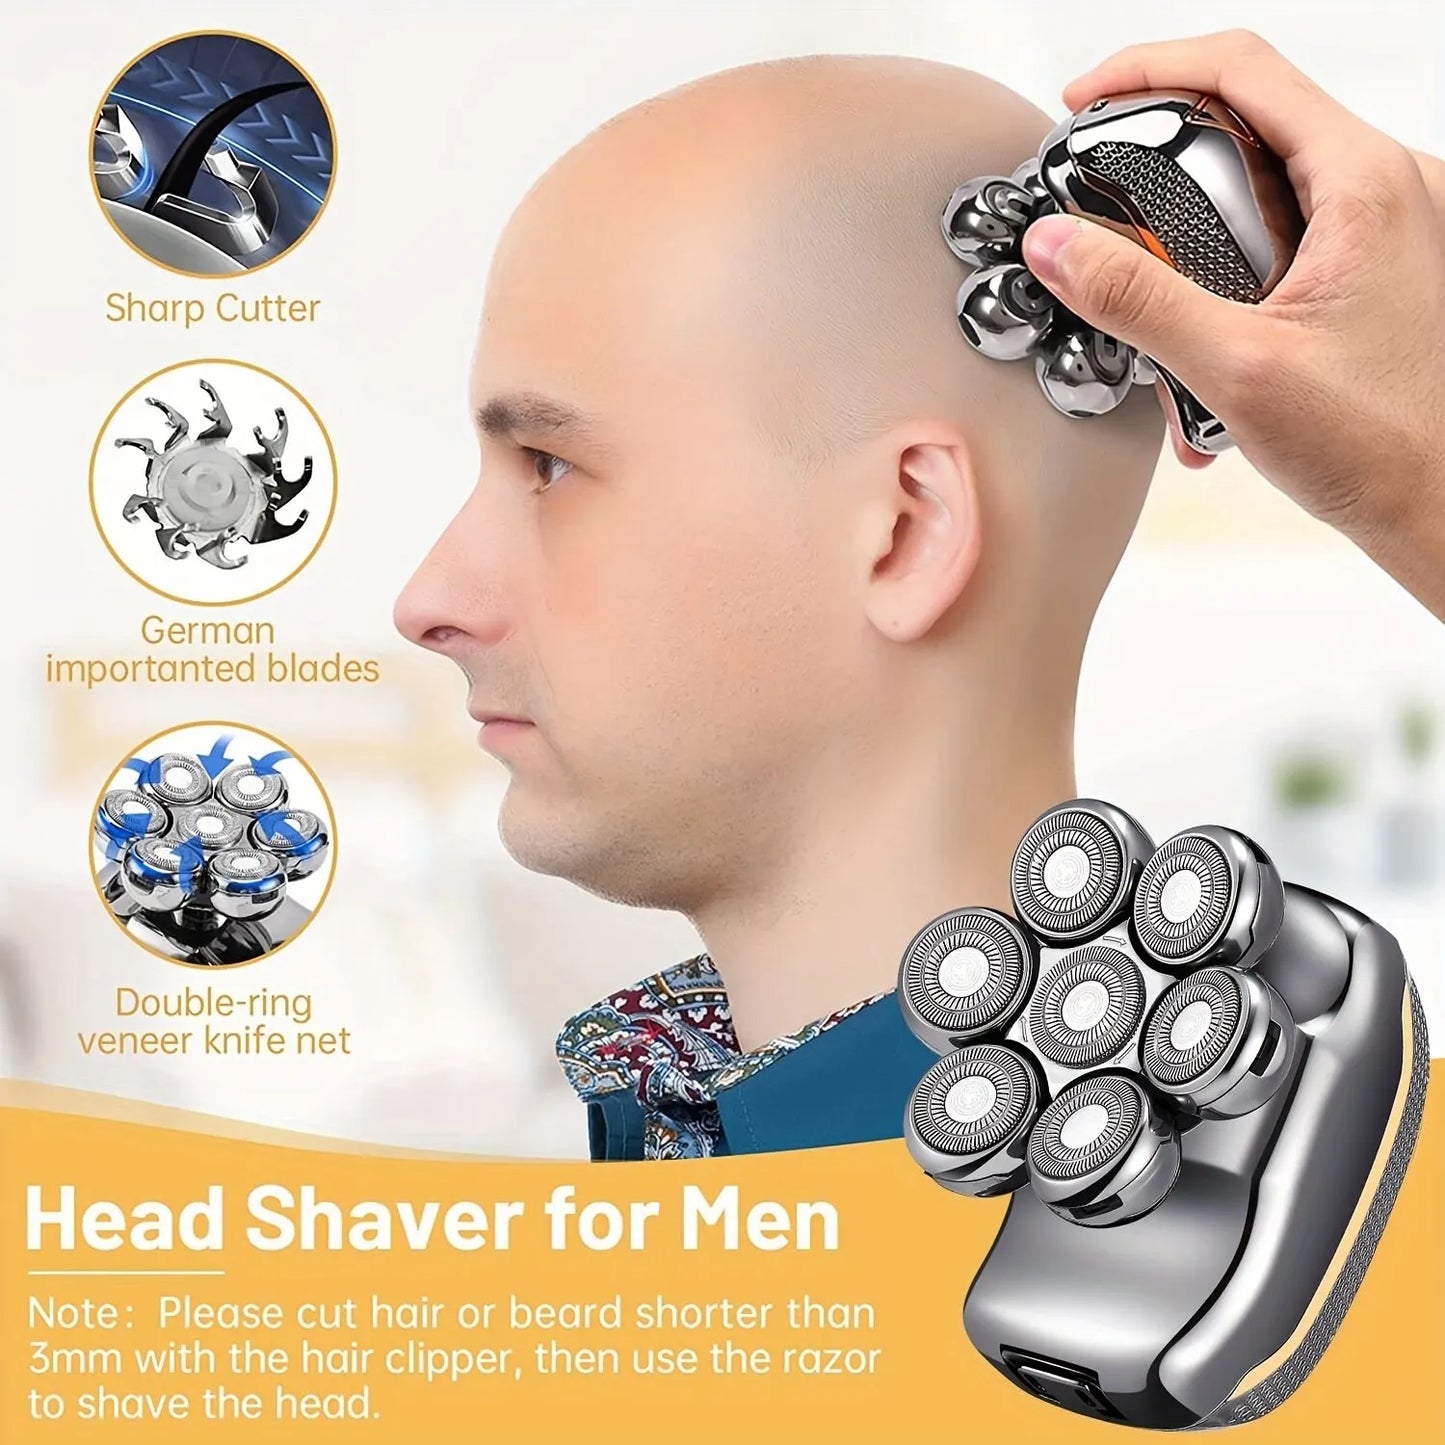 6-in-1 Waterproof Electric Head Shaver for Men